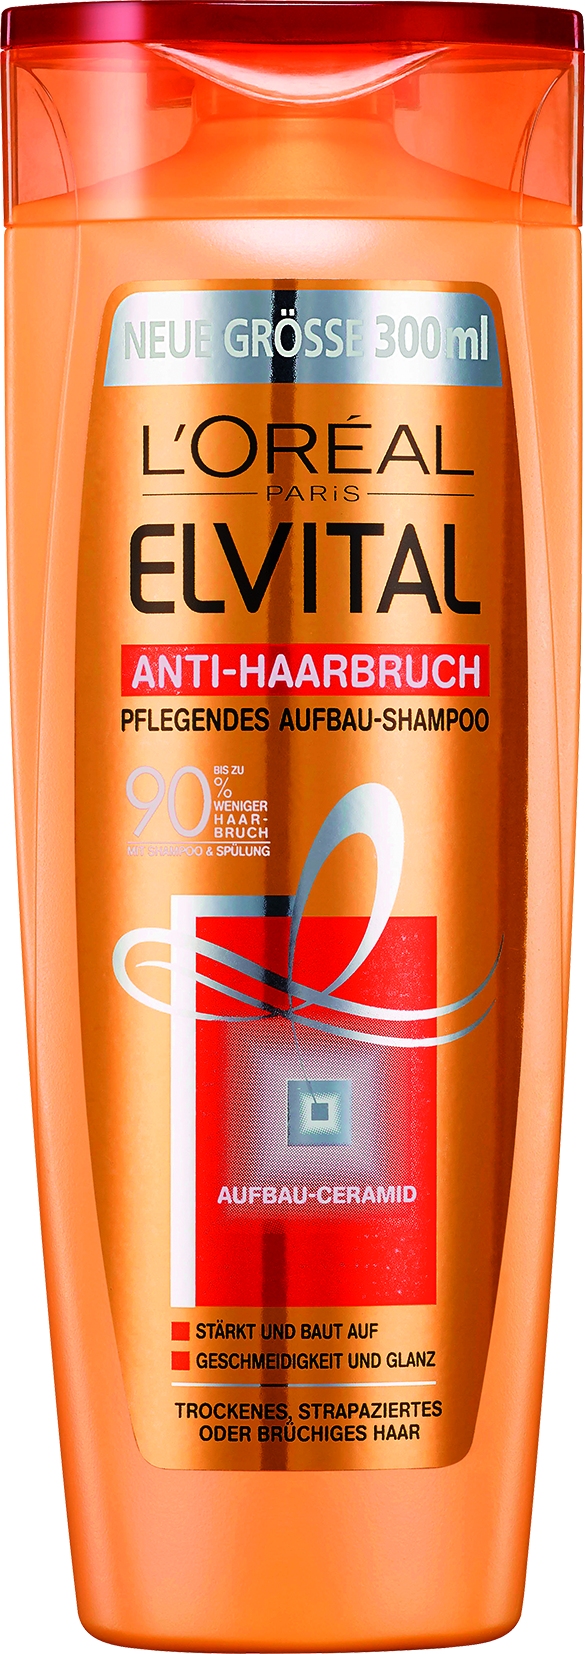 Shampoo Anti-Haarbruch   